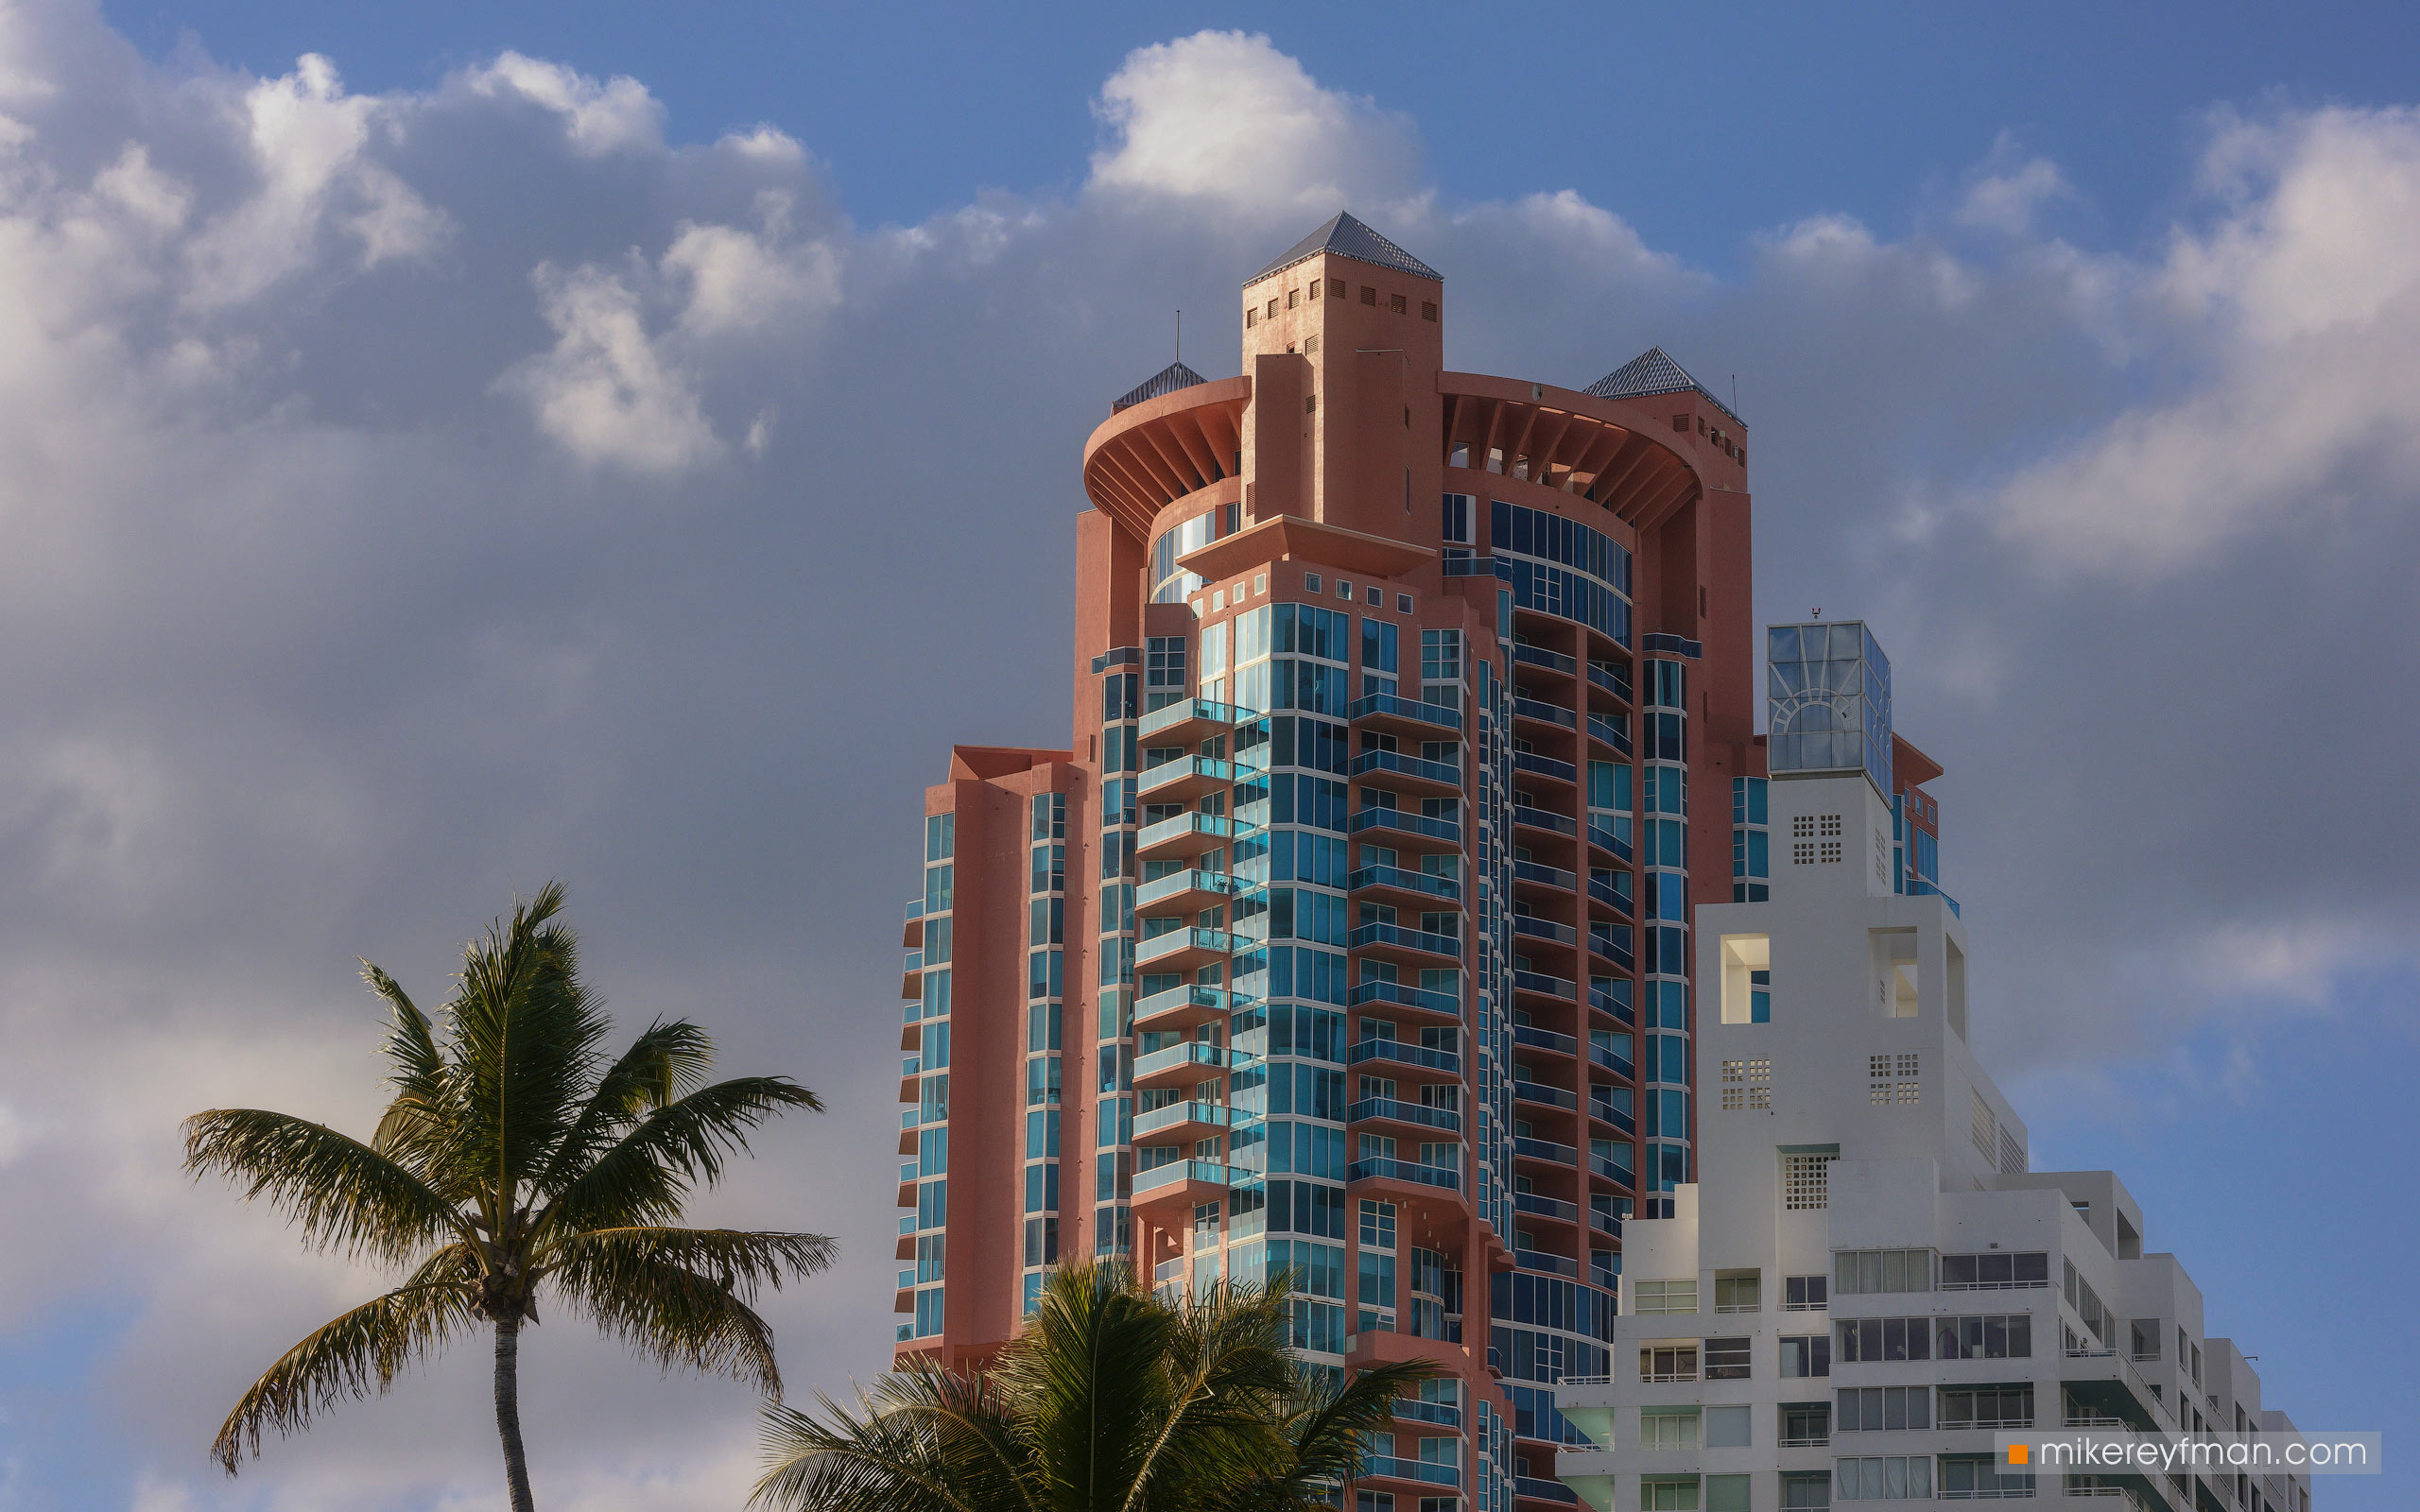 Miami, Florida, USA 014-MI1-ZRA6324 - Brown Pelicans of Sunny Isles Beach and Wynwood Walls Murals. Miami, Florida, USA - Mike Reyfman Photography